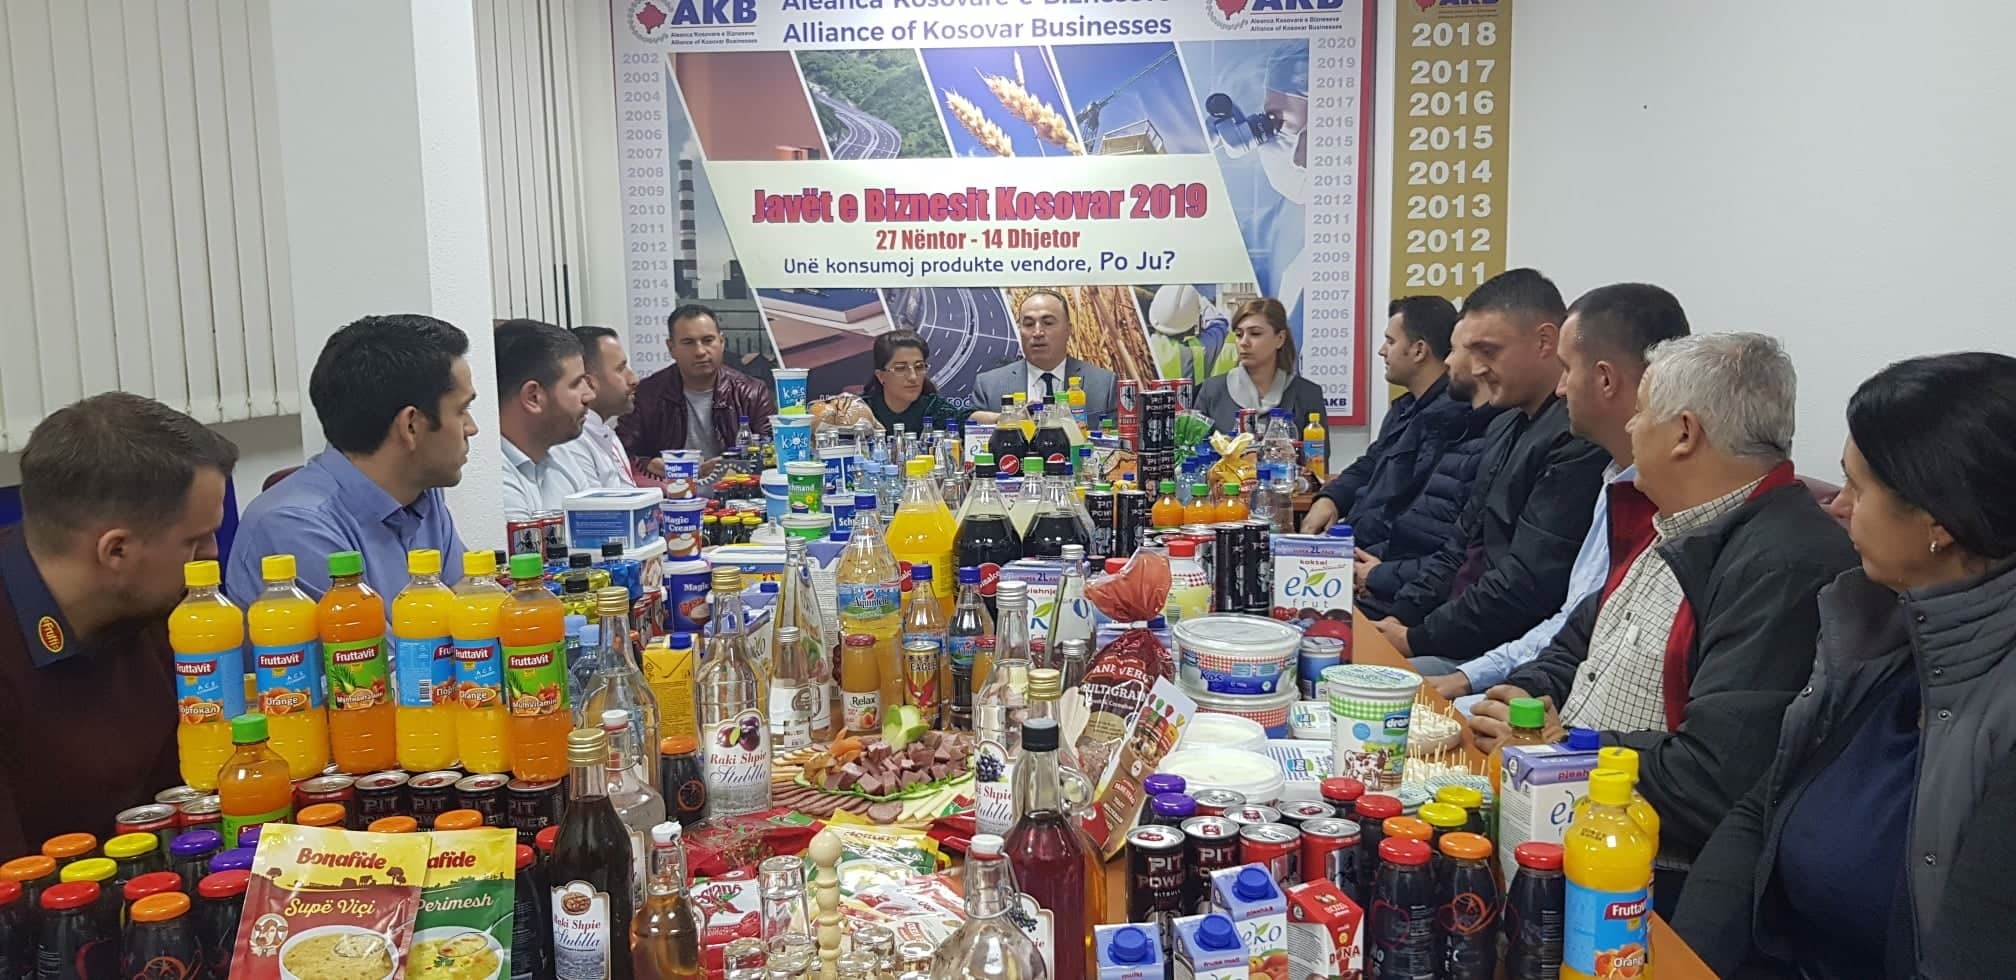  Me 500 produkte vendore nisin "Javët eBiznesit Kosovar 2019""